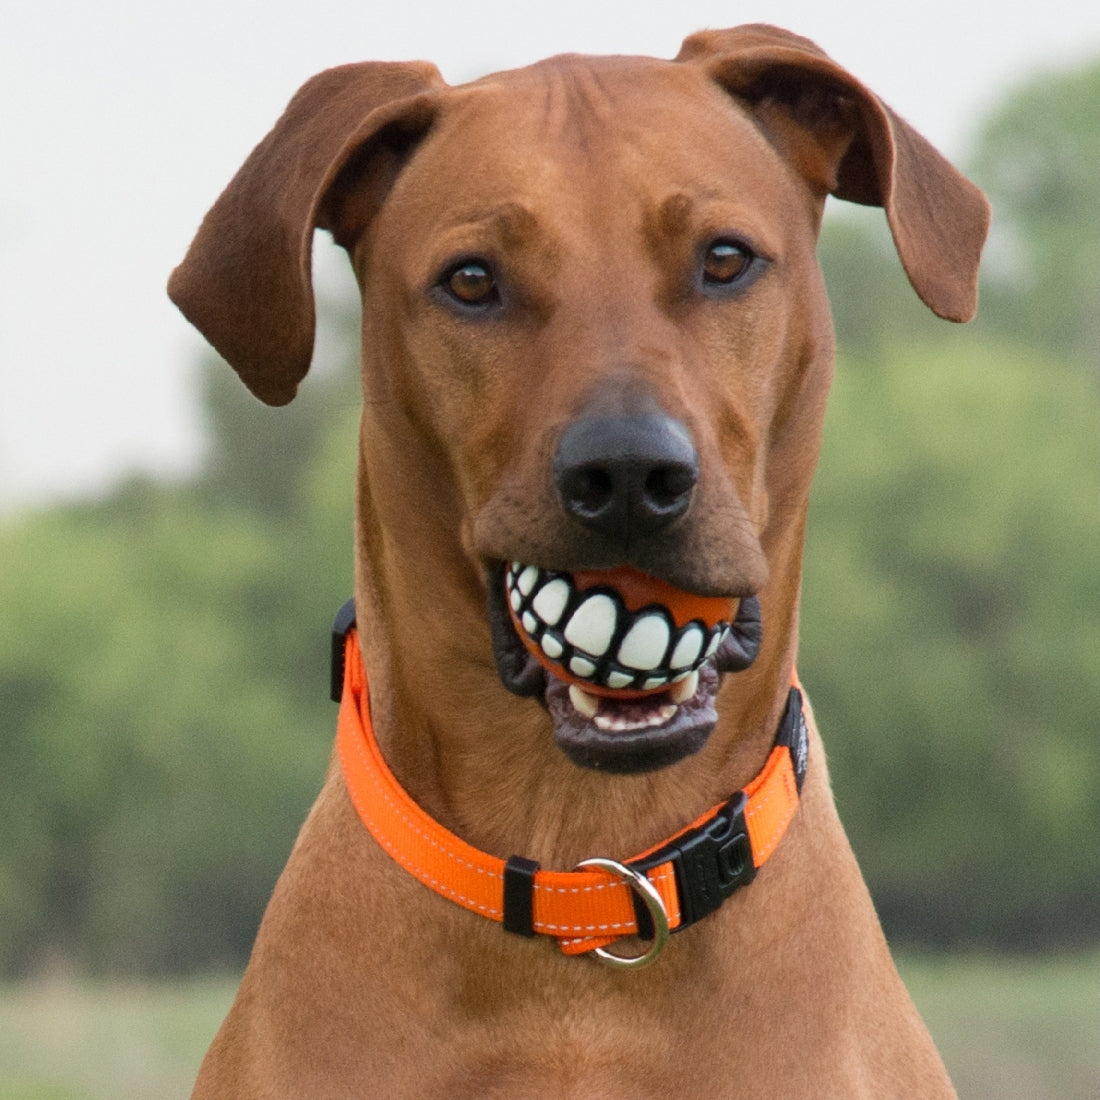 Brown dog wearing a Rogz collar, ball with teeth design.